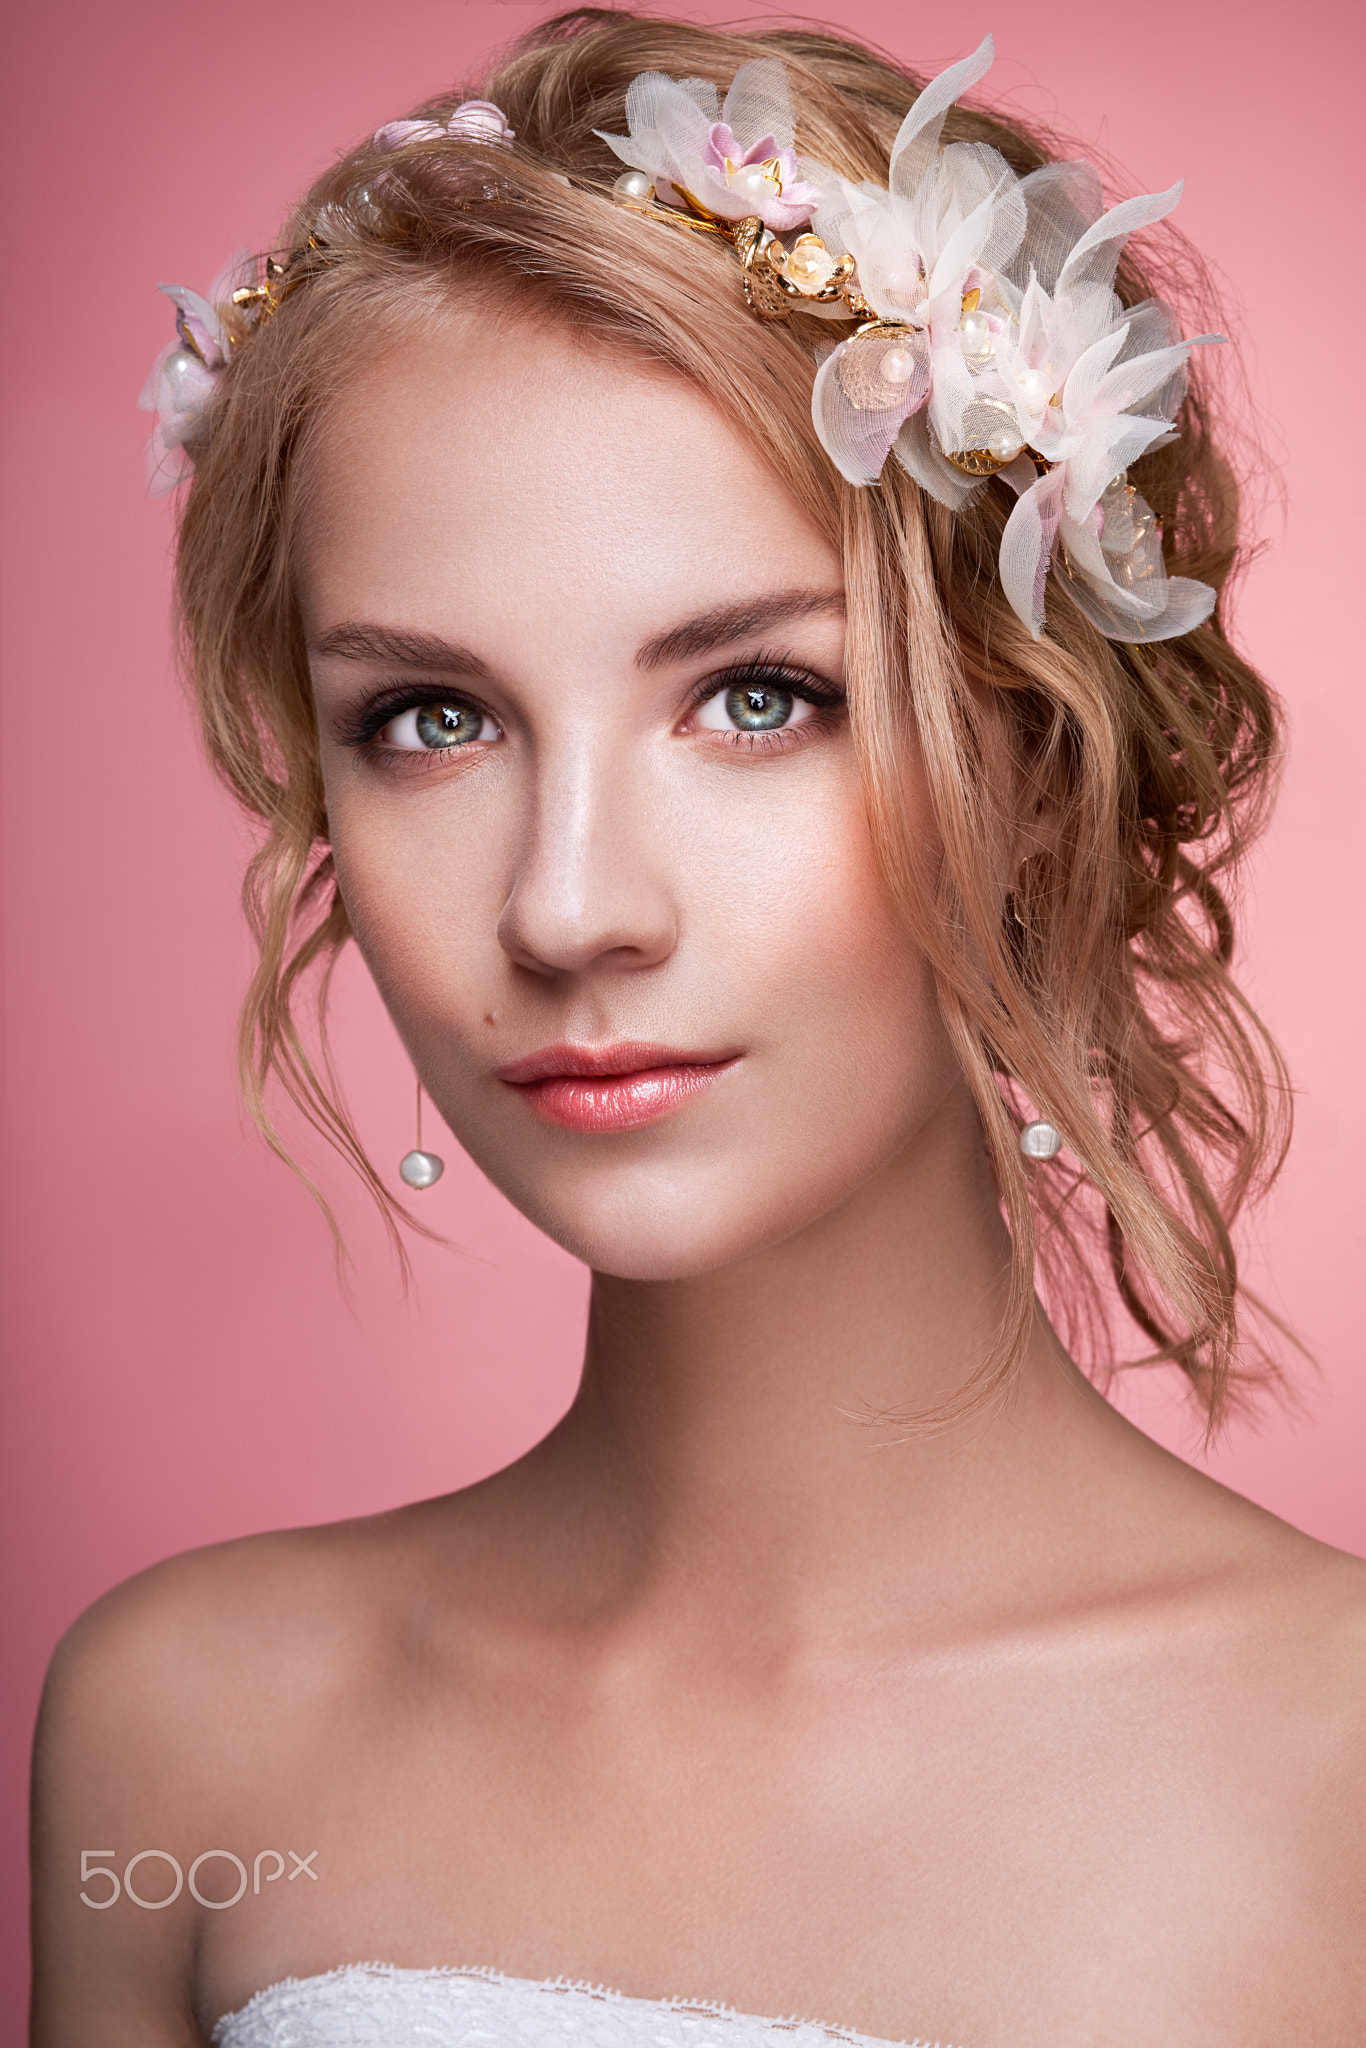 Oleg Gekman Women Blonde Makeup Hair Accessories Glamour Bare Shoulders Portrait Simple Background P 1366x2048